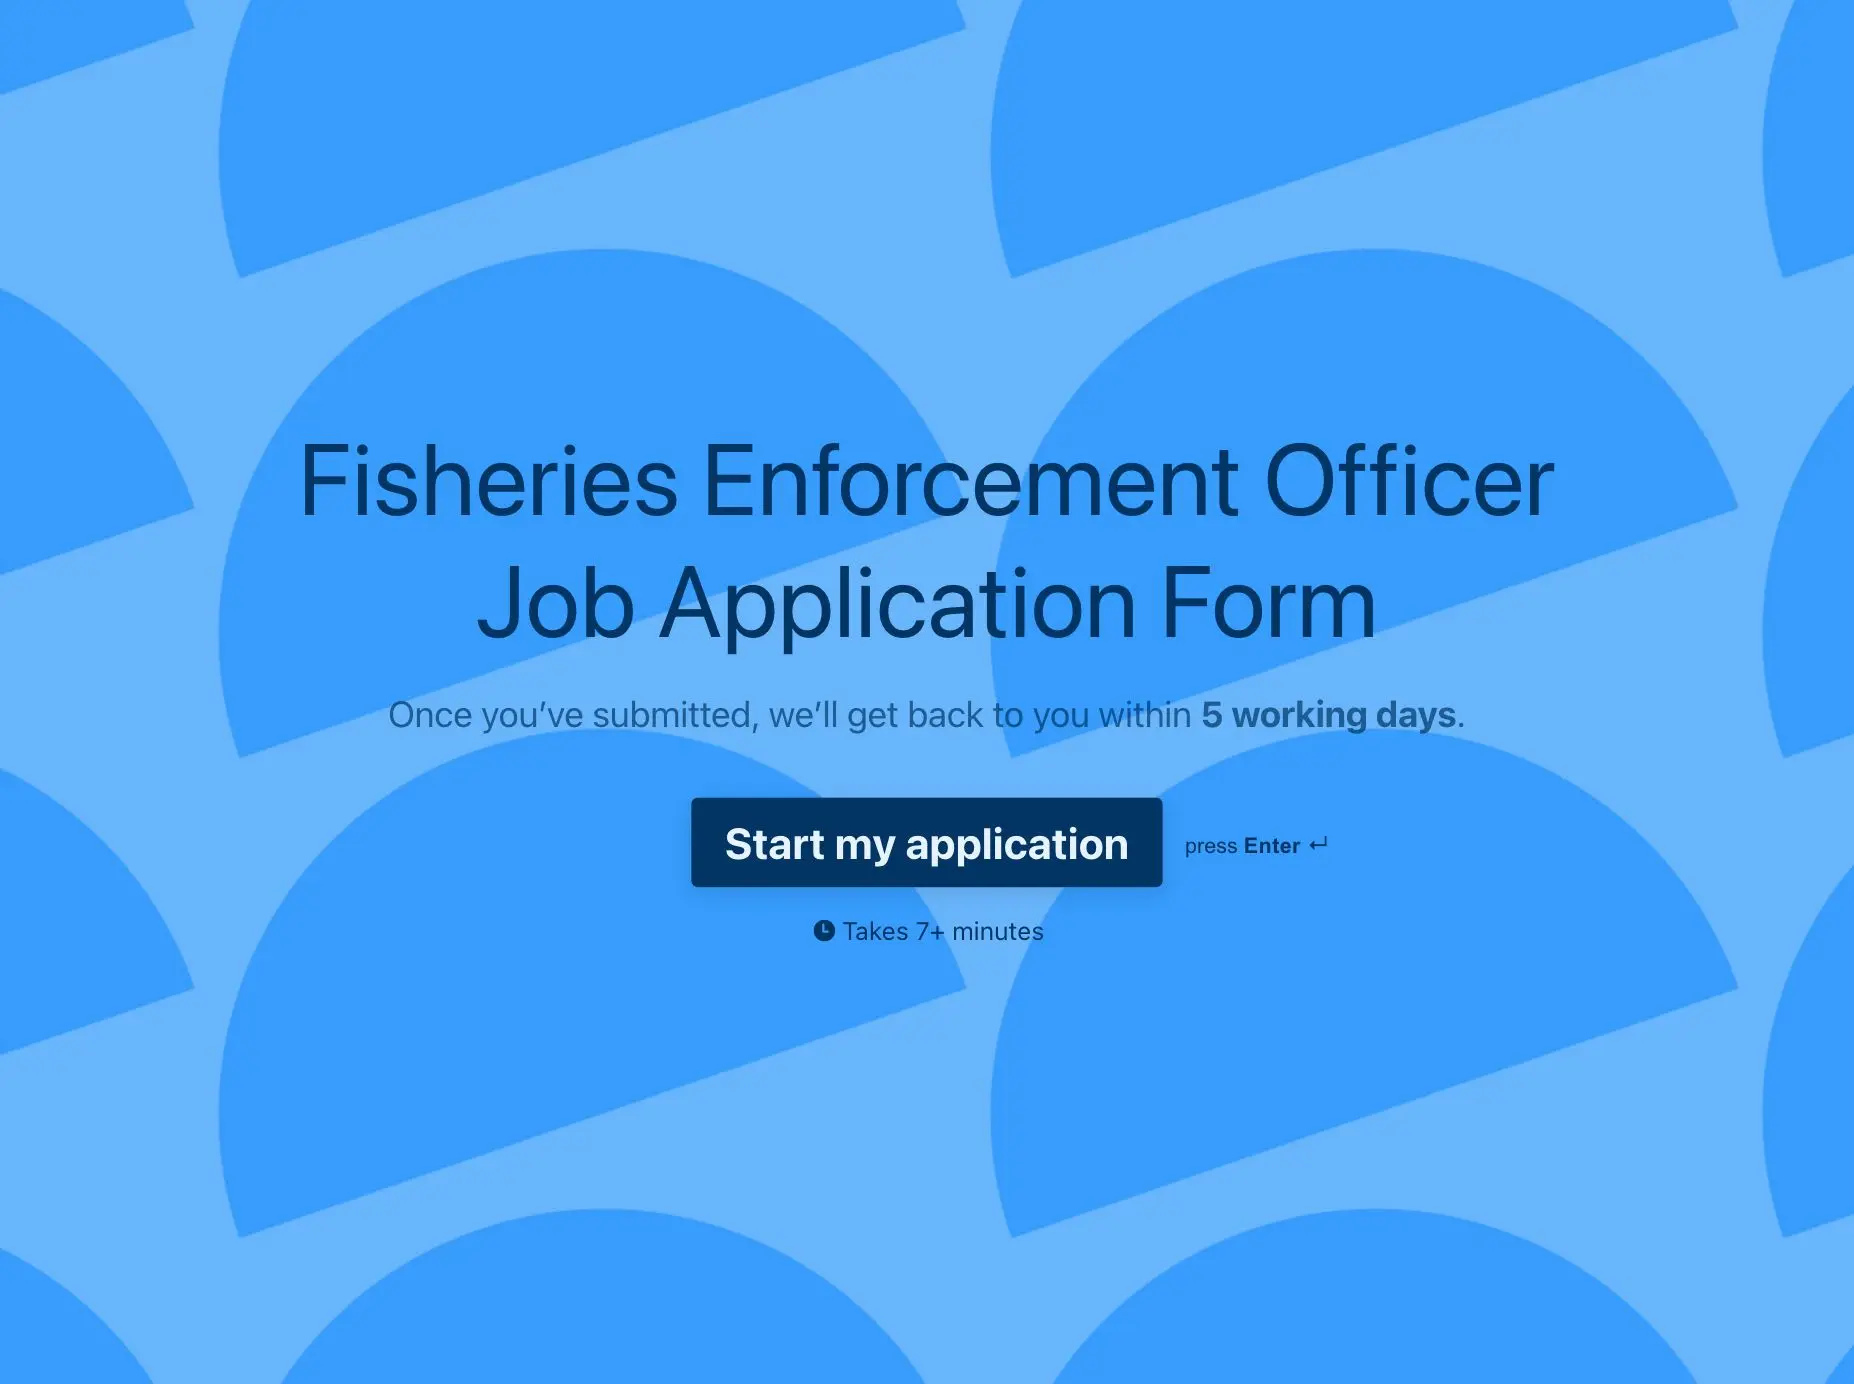 Fisheries Enforcement Officer Job Application Form Template Hero